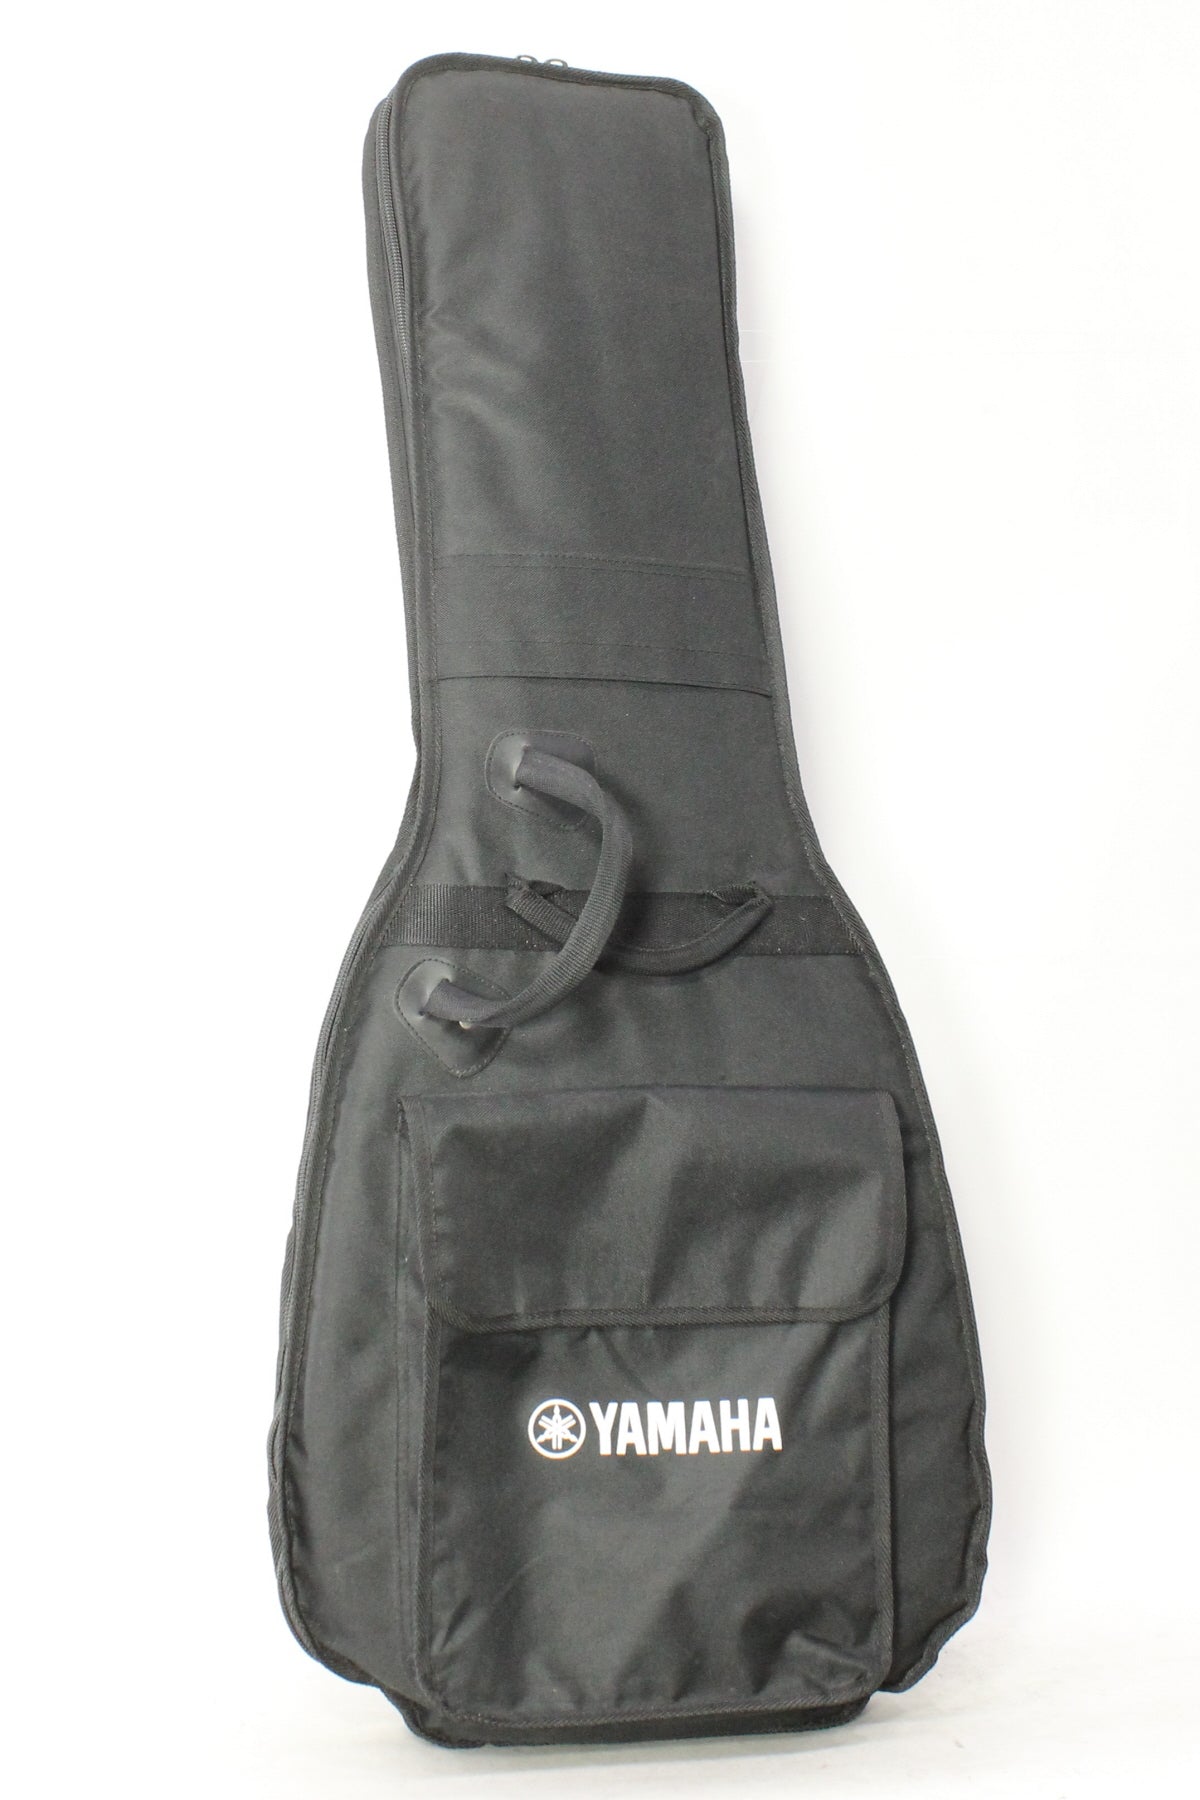 [SN IHH173387] USED Yamaha / PAC612VIIFM Translucent Black [03]